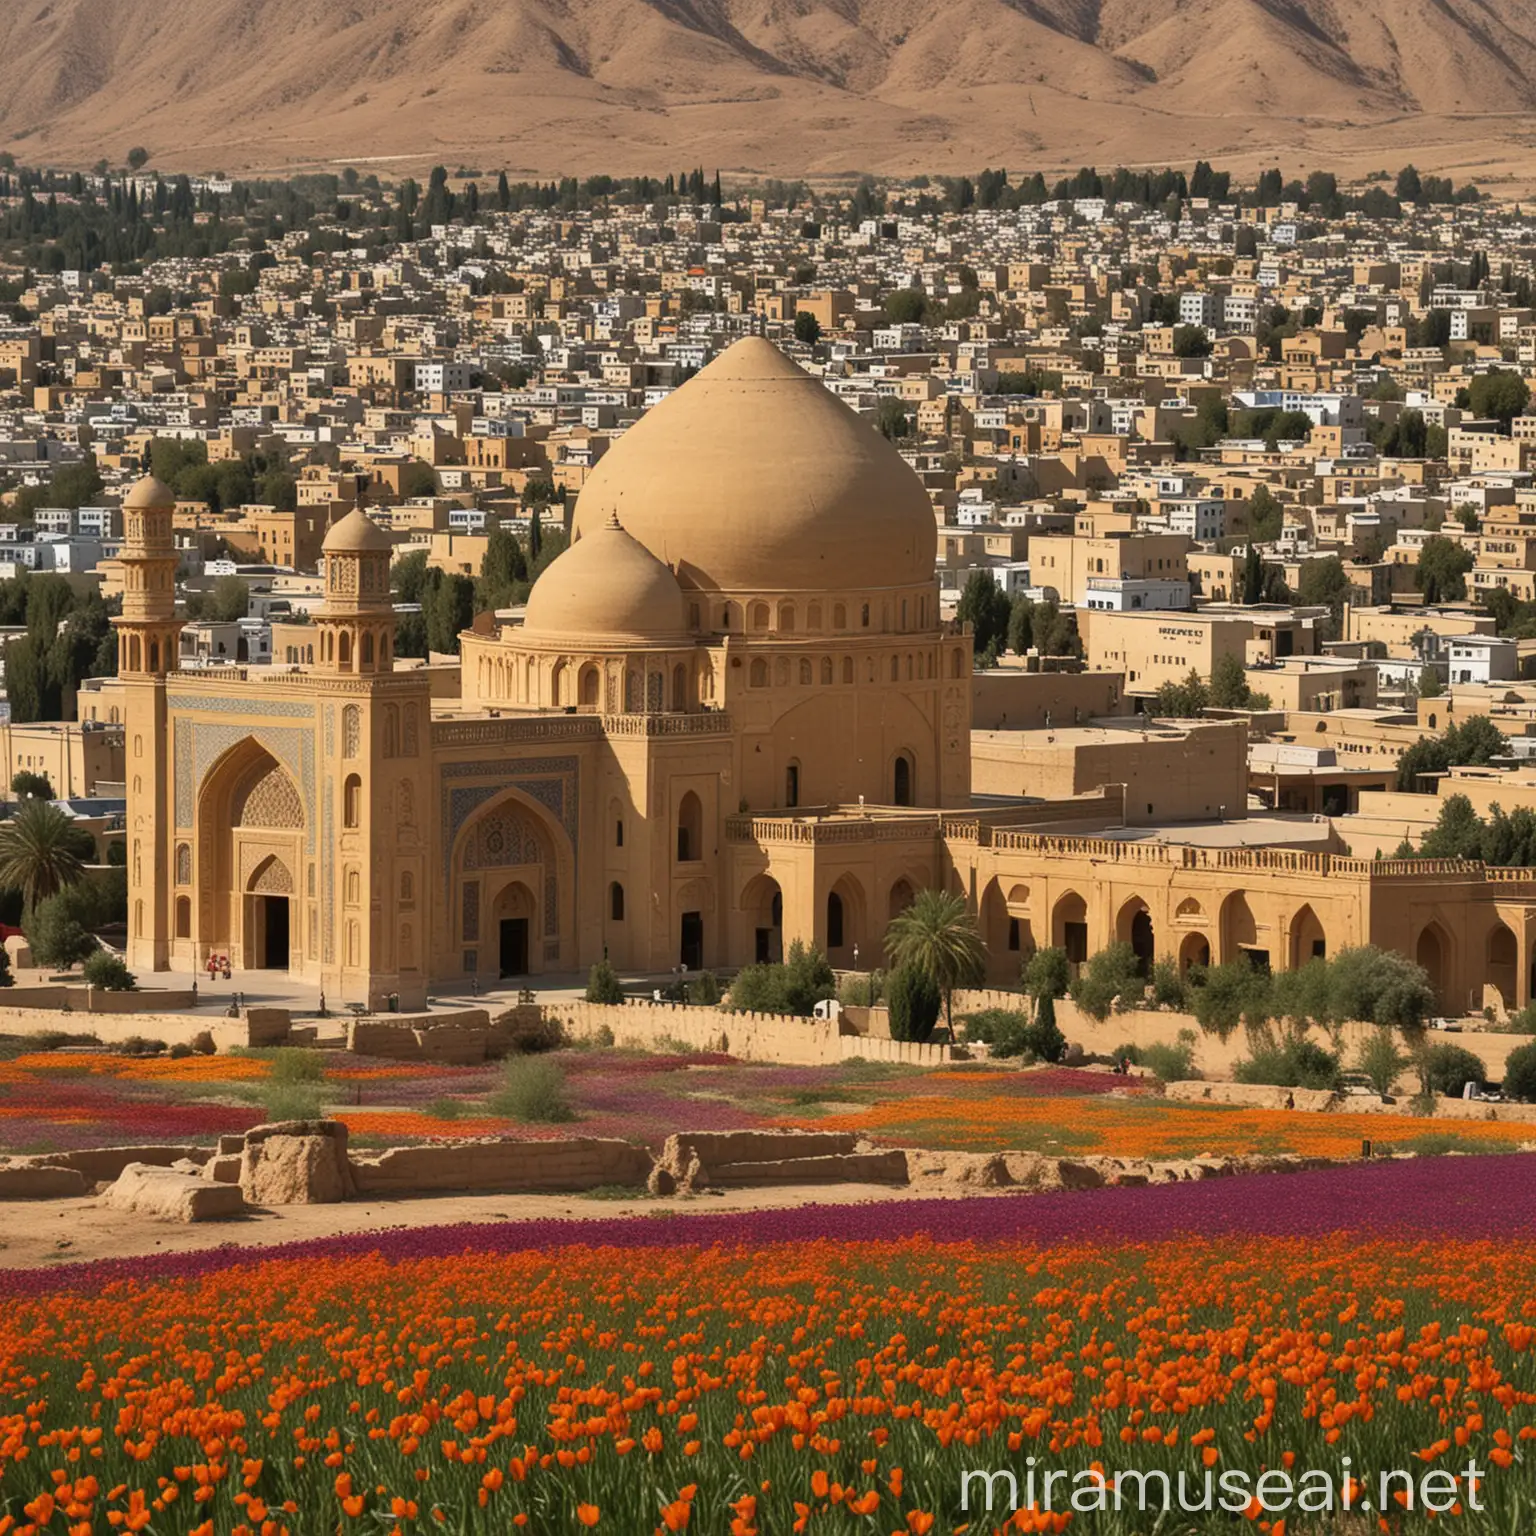 Saffron Fields Surrounding Historic Buildings of Shiraz